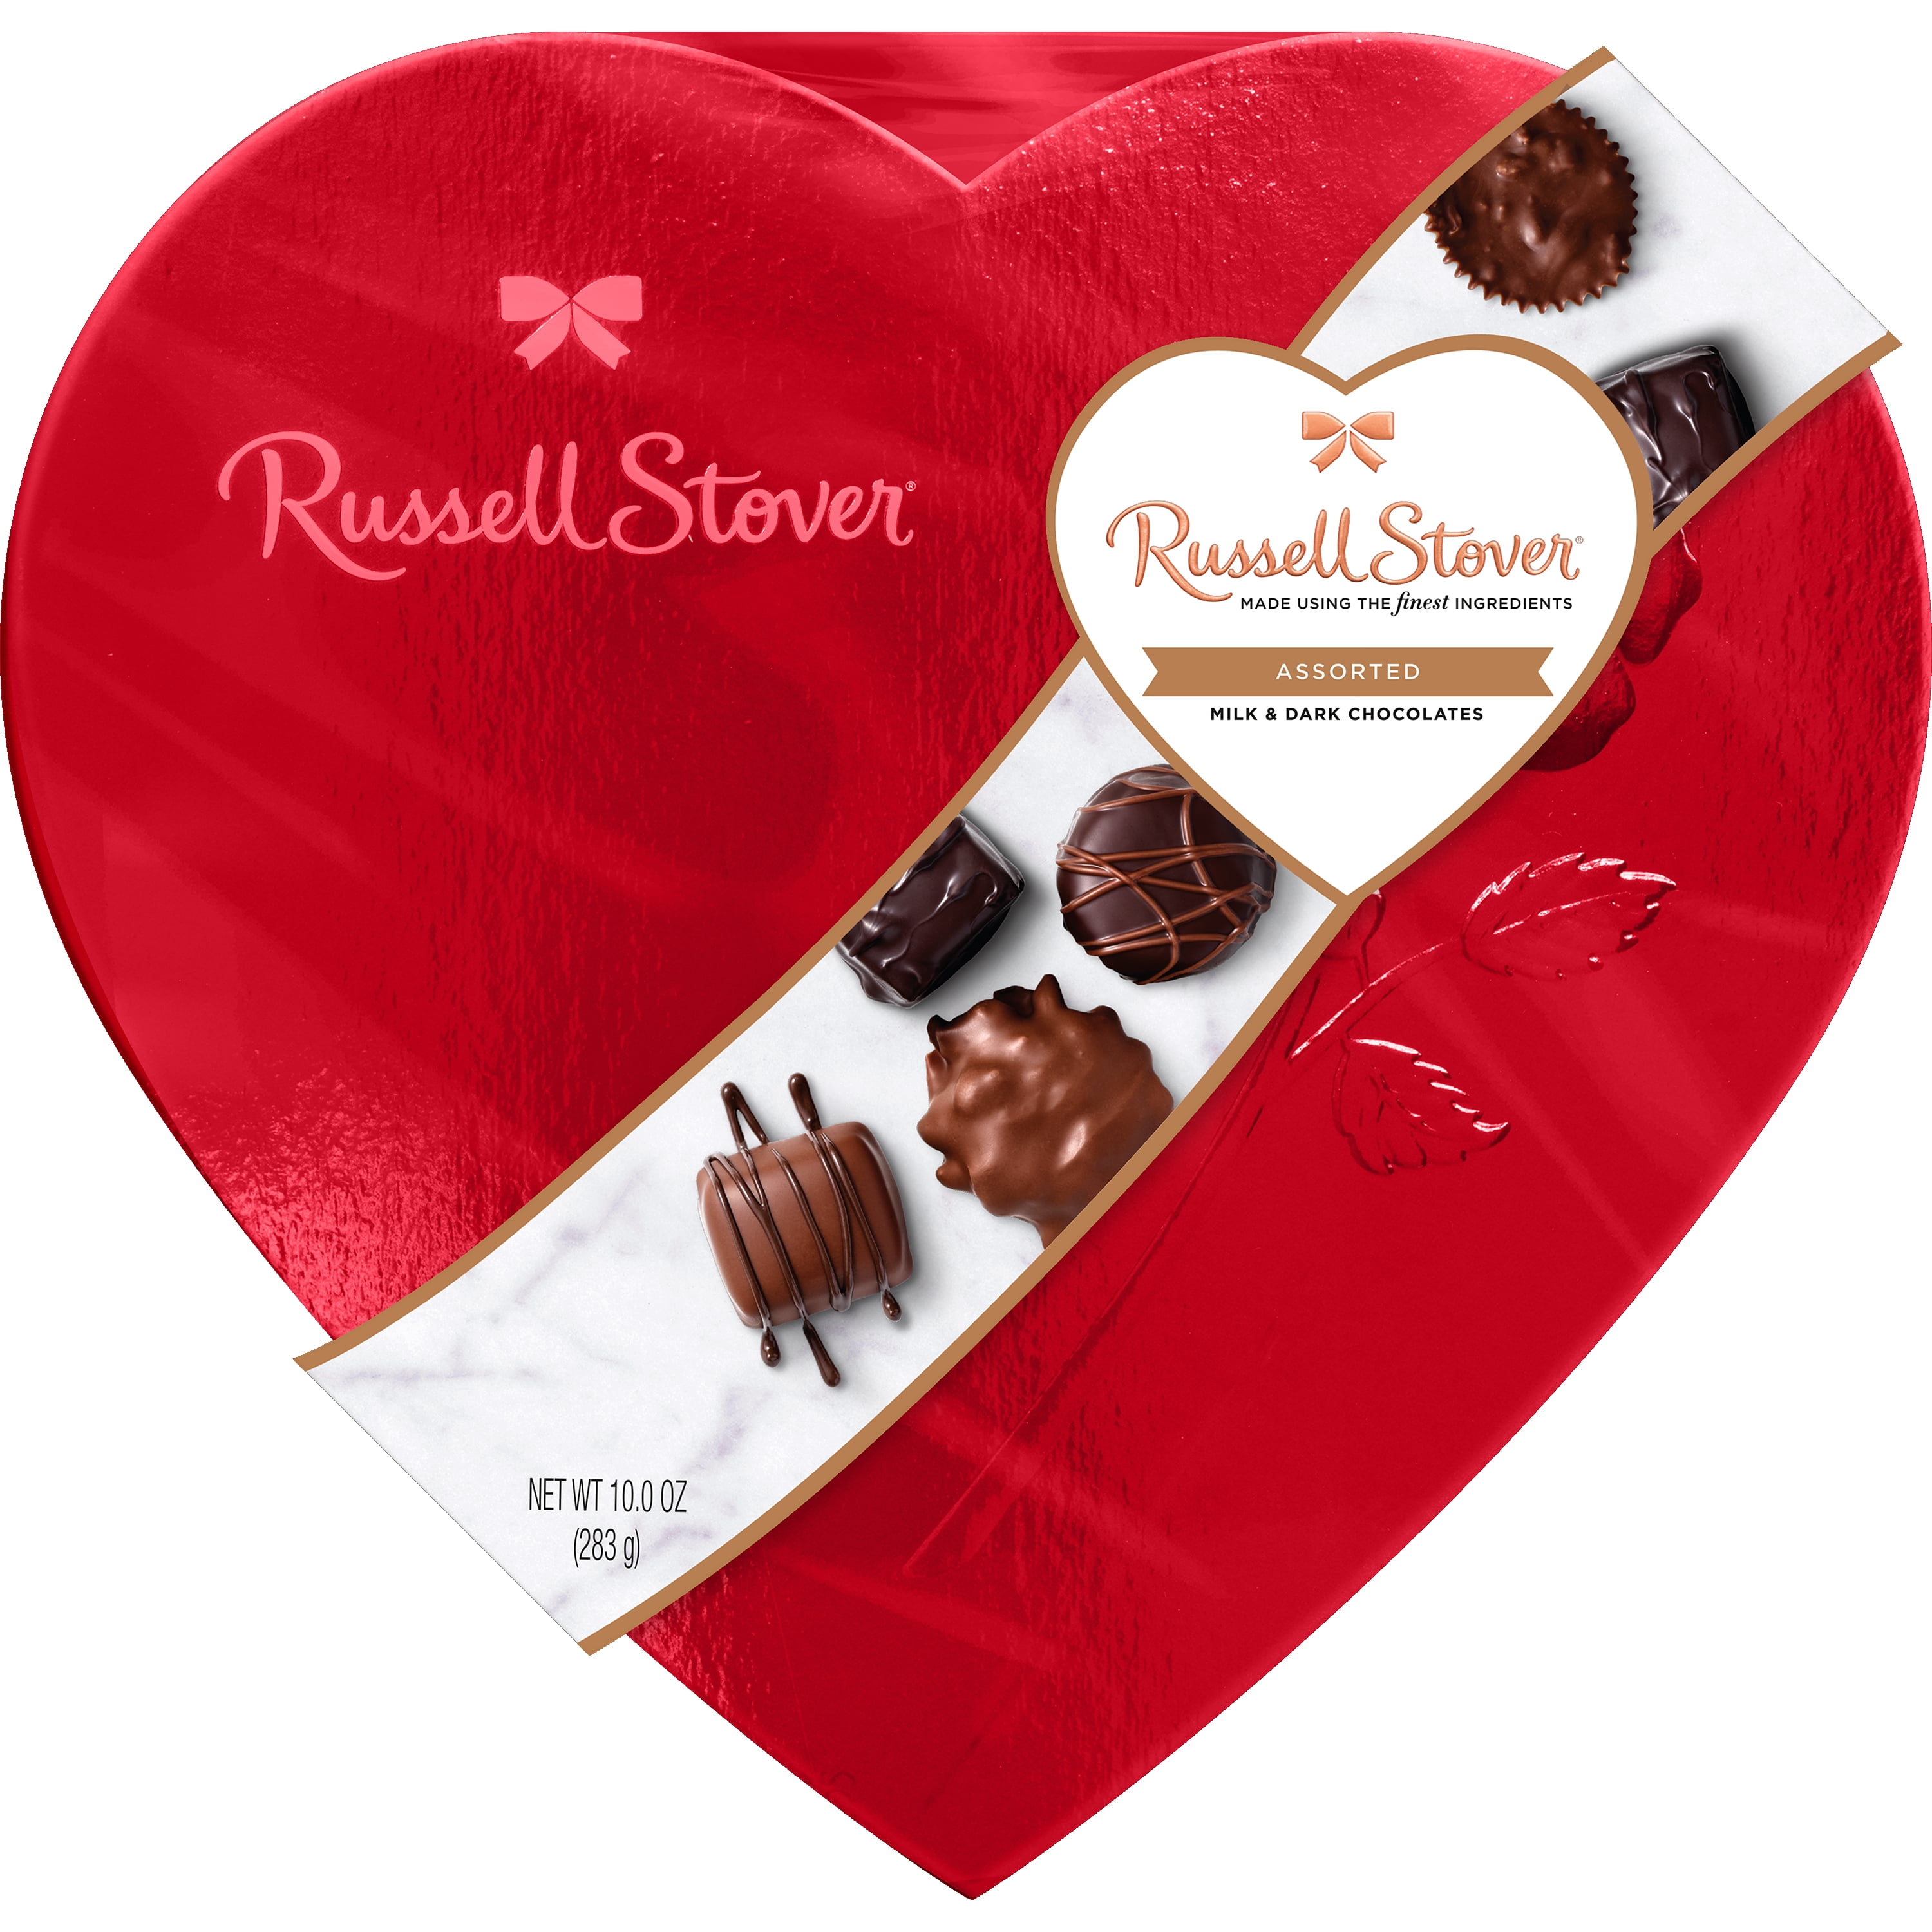 Valentine Heart One Pound Gift Box -- Morkes Chocolates